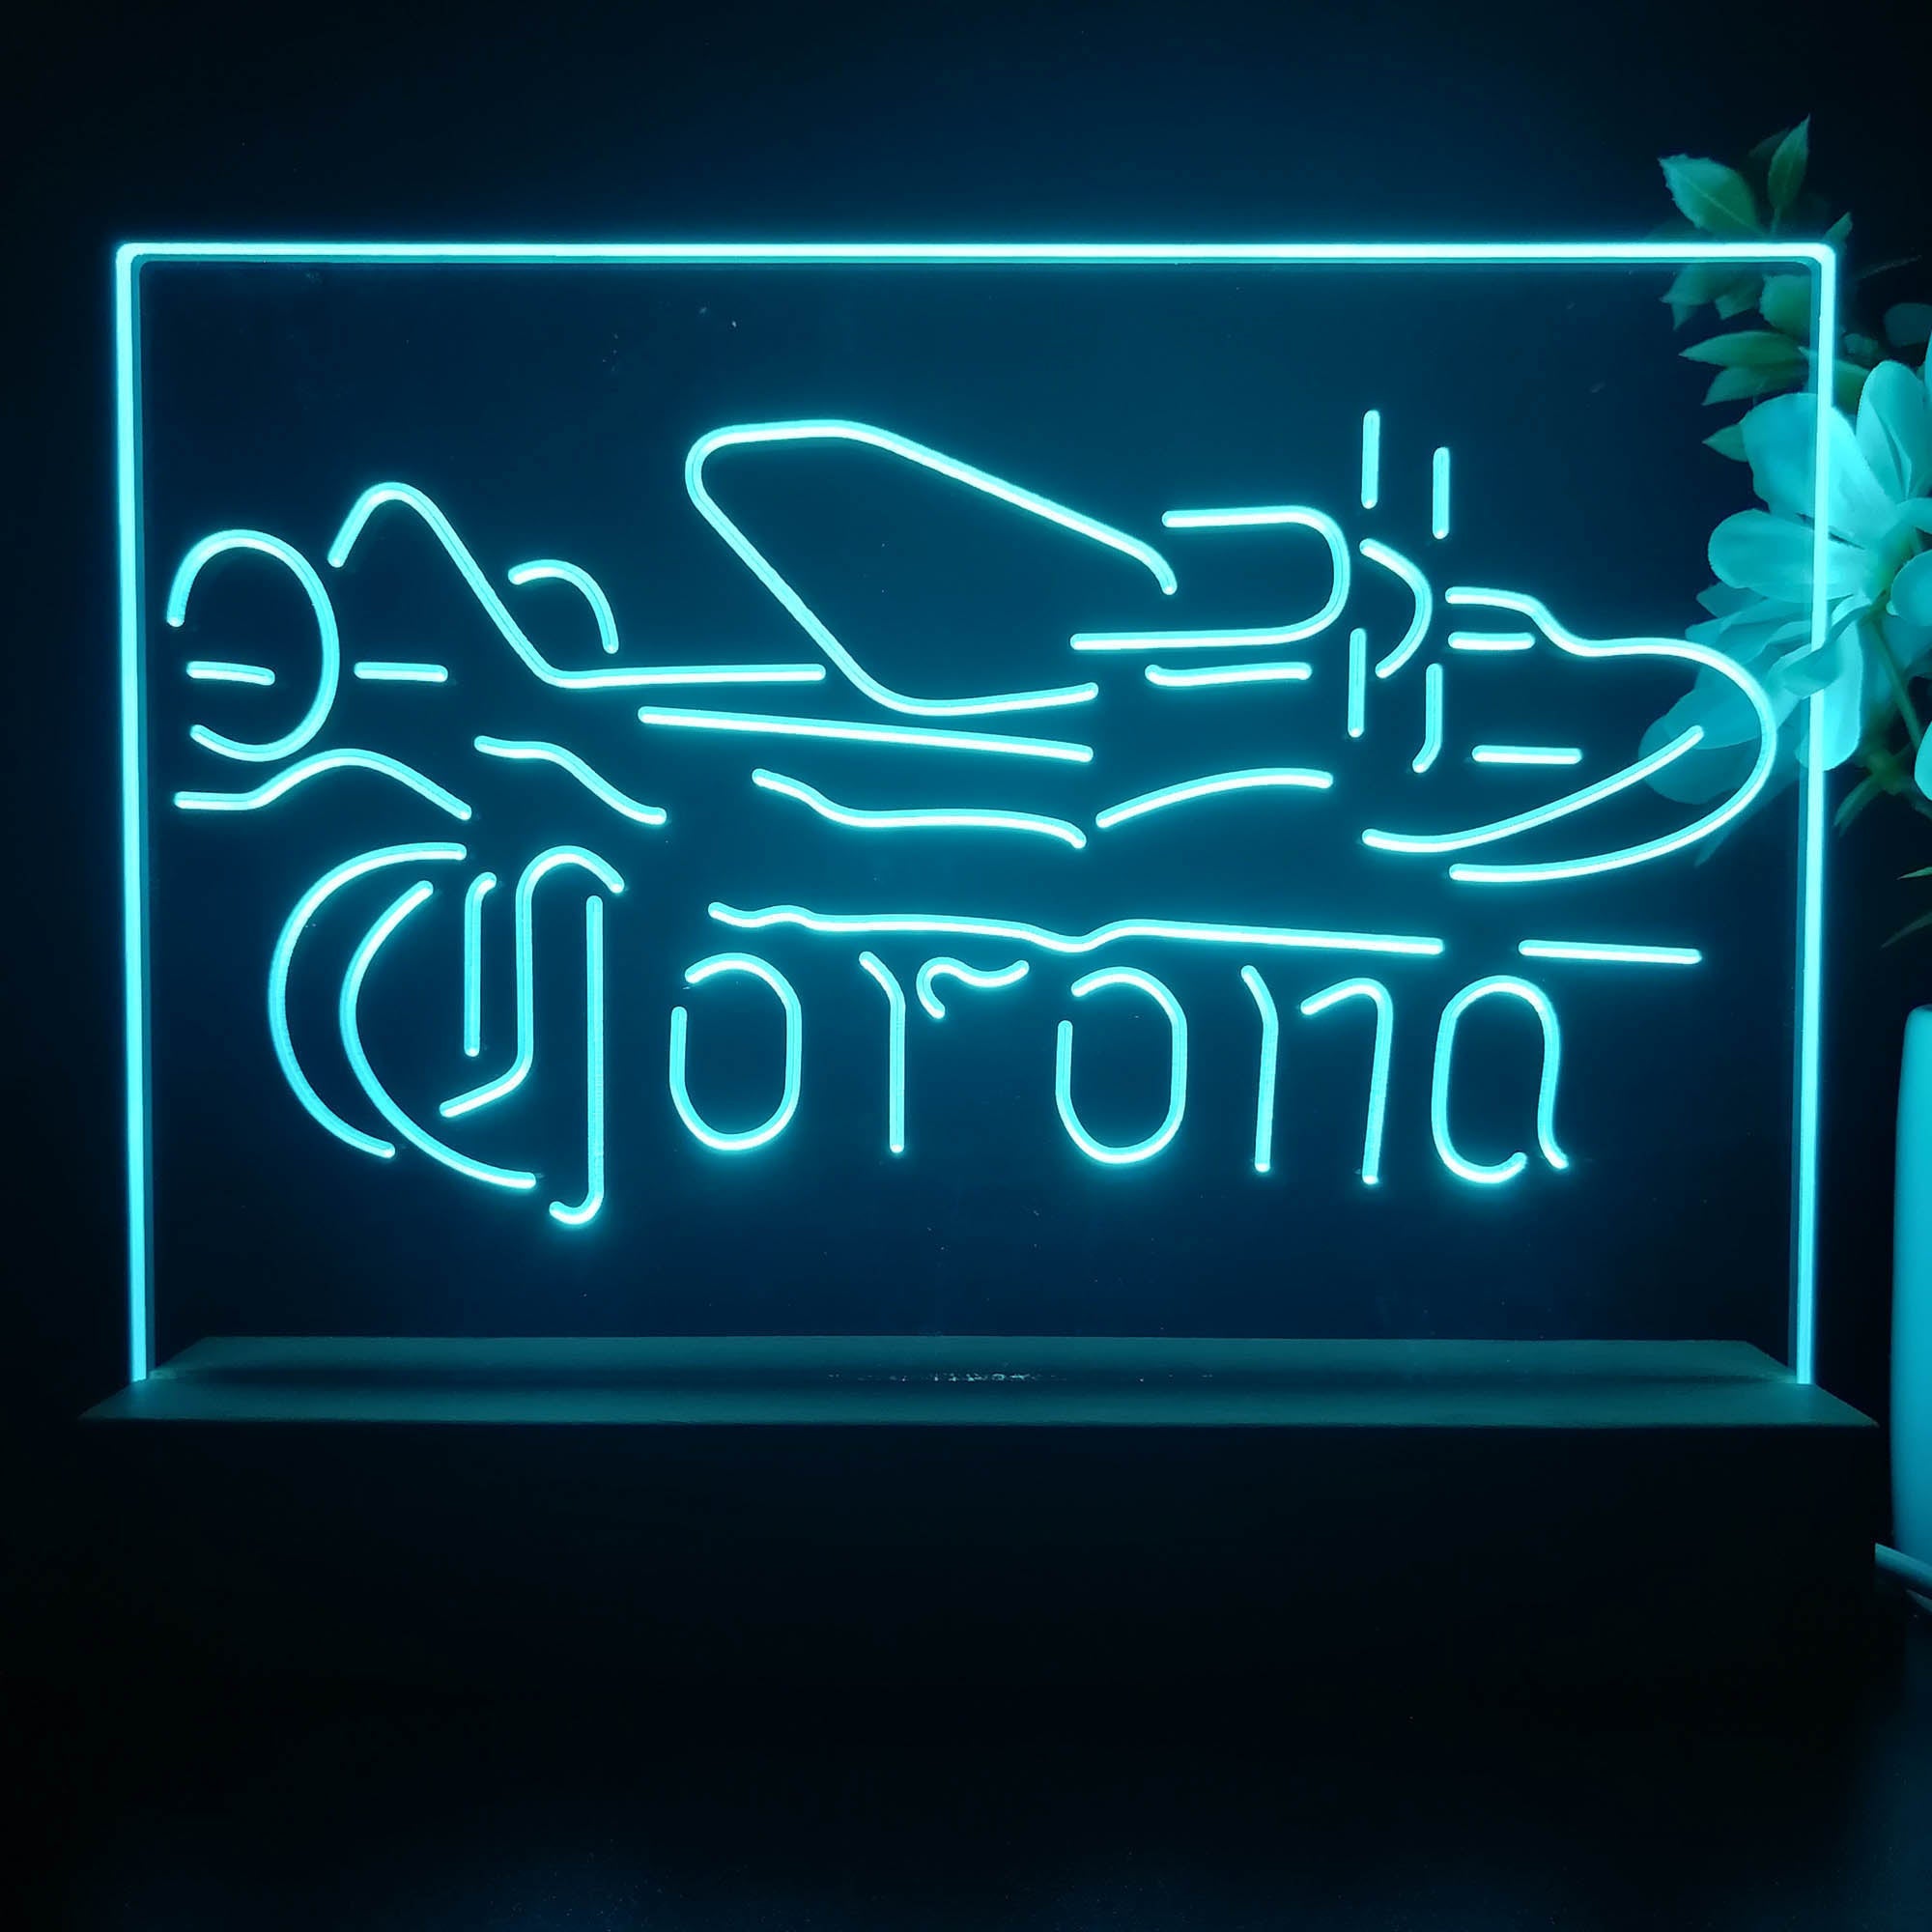 Corona Classic Plane Neon Sign Pub Bar Lamp